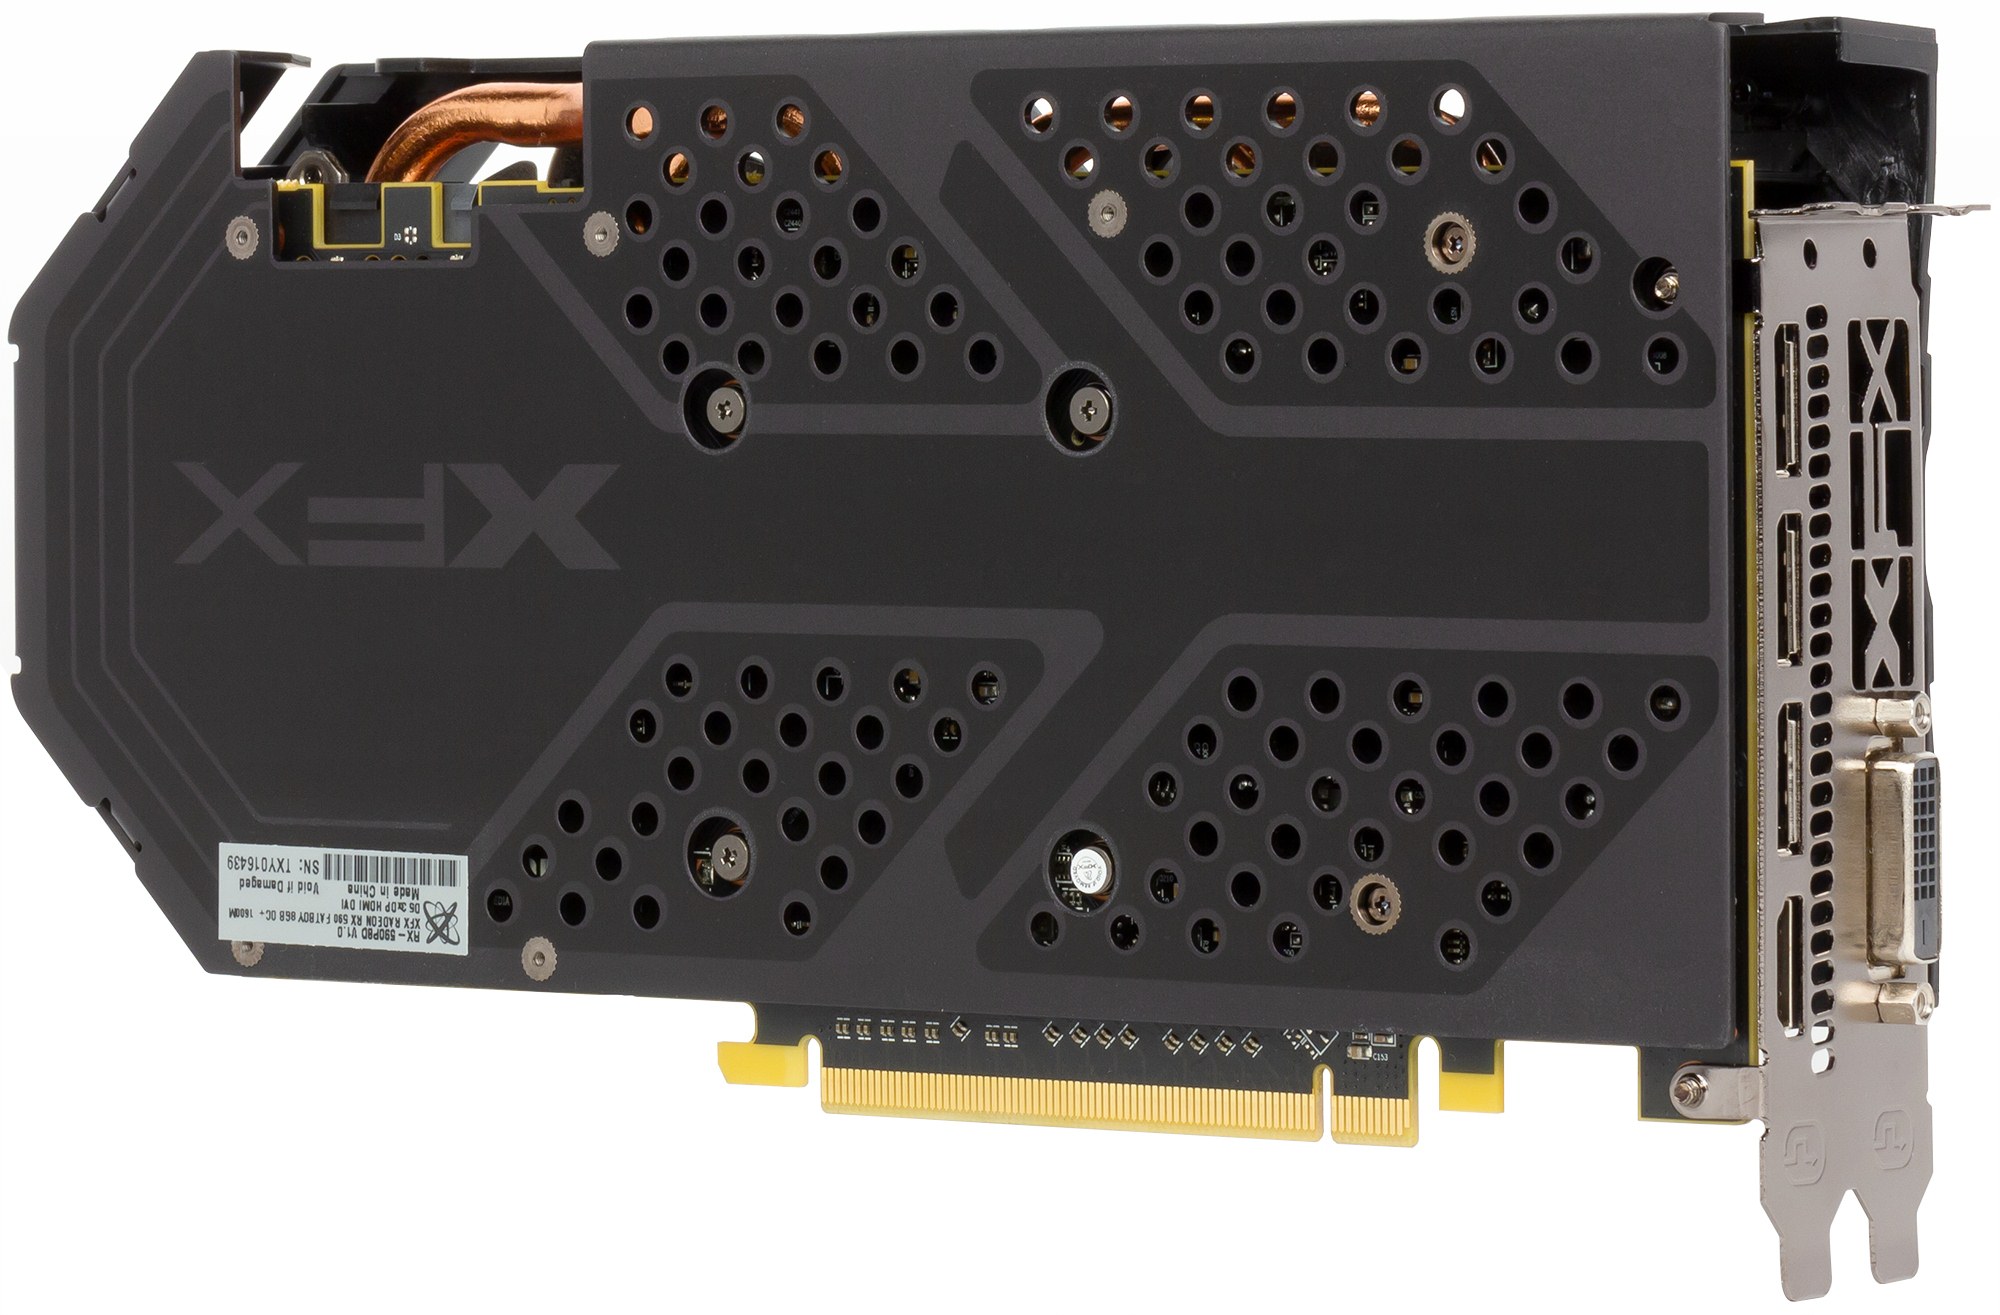 Обзор AMD Radeon RX 590: немного ускоренная версия RX 580 за ту же цену